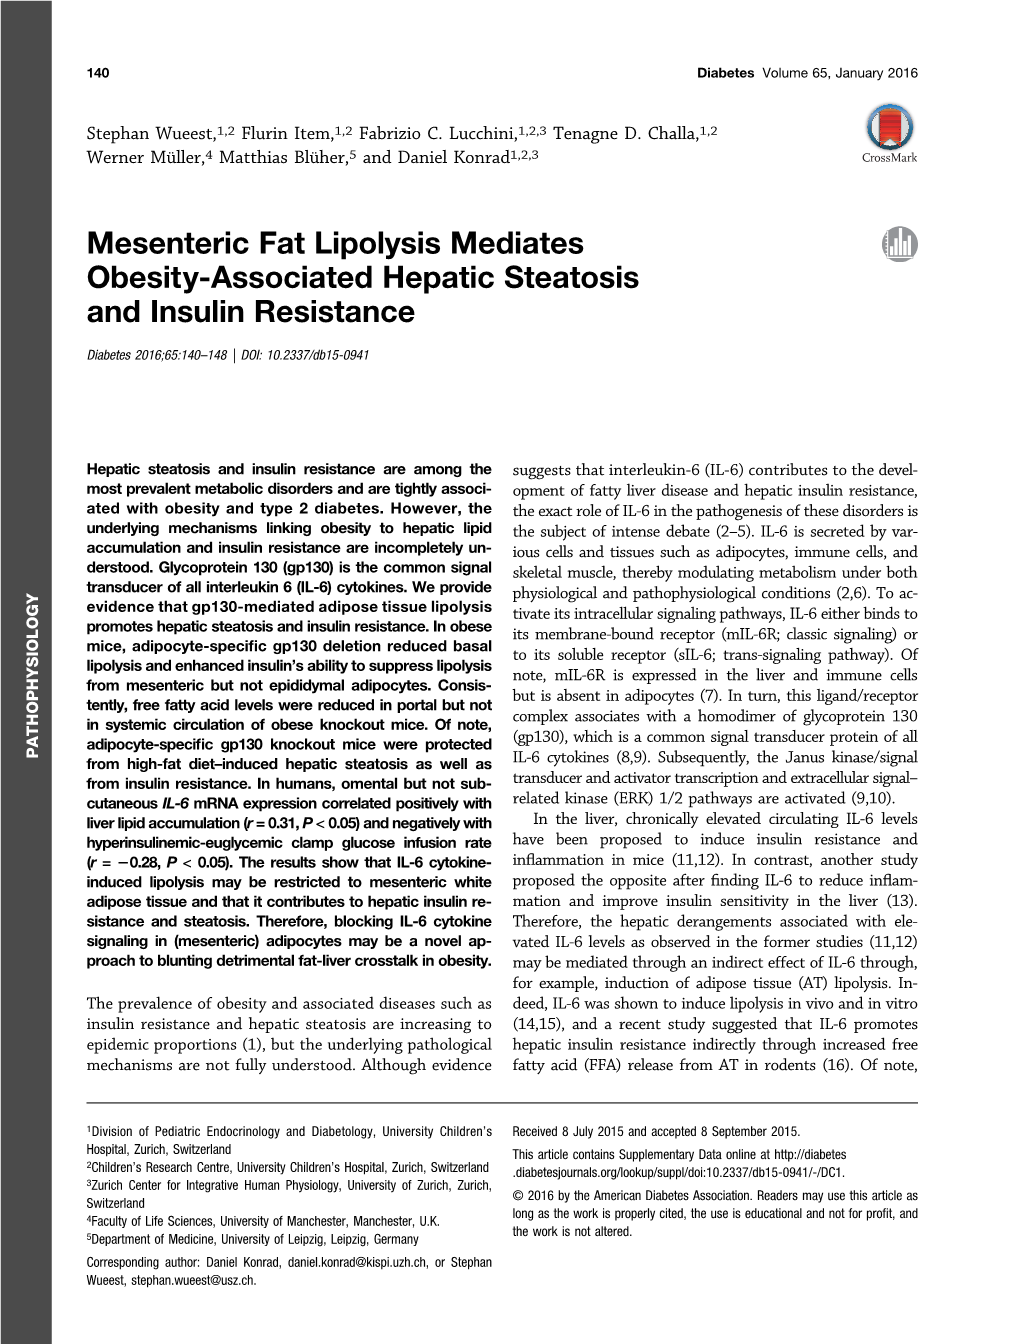 Mesenteric Fat Lipolysis Mediates Obesity-Associated Hepatic Steatosis and Insulin Resistance